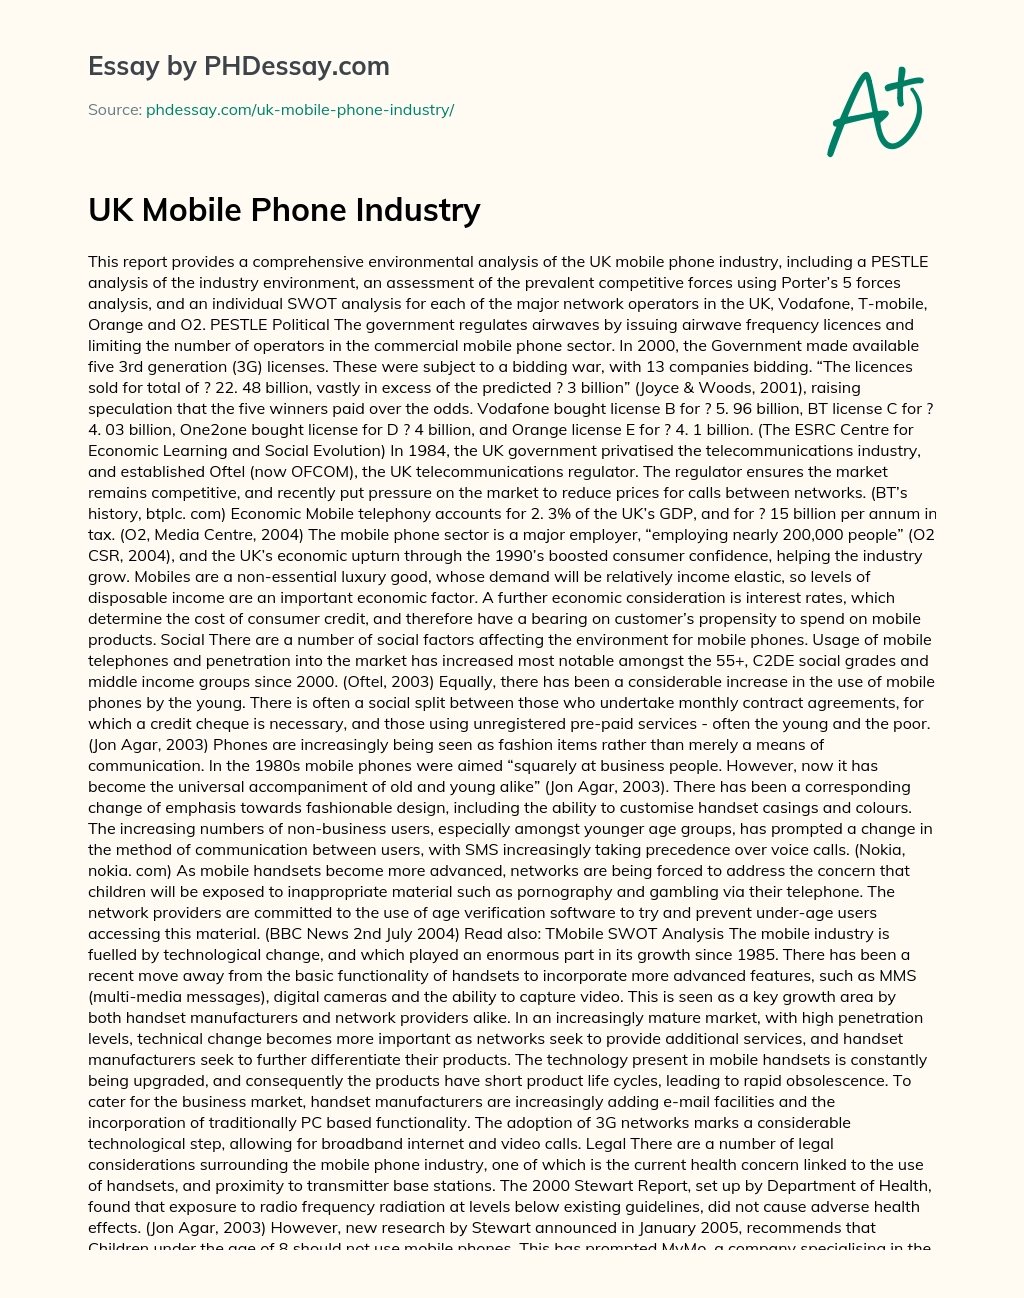 UK Mobile Phone Industry essay